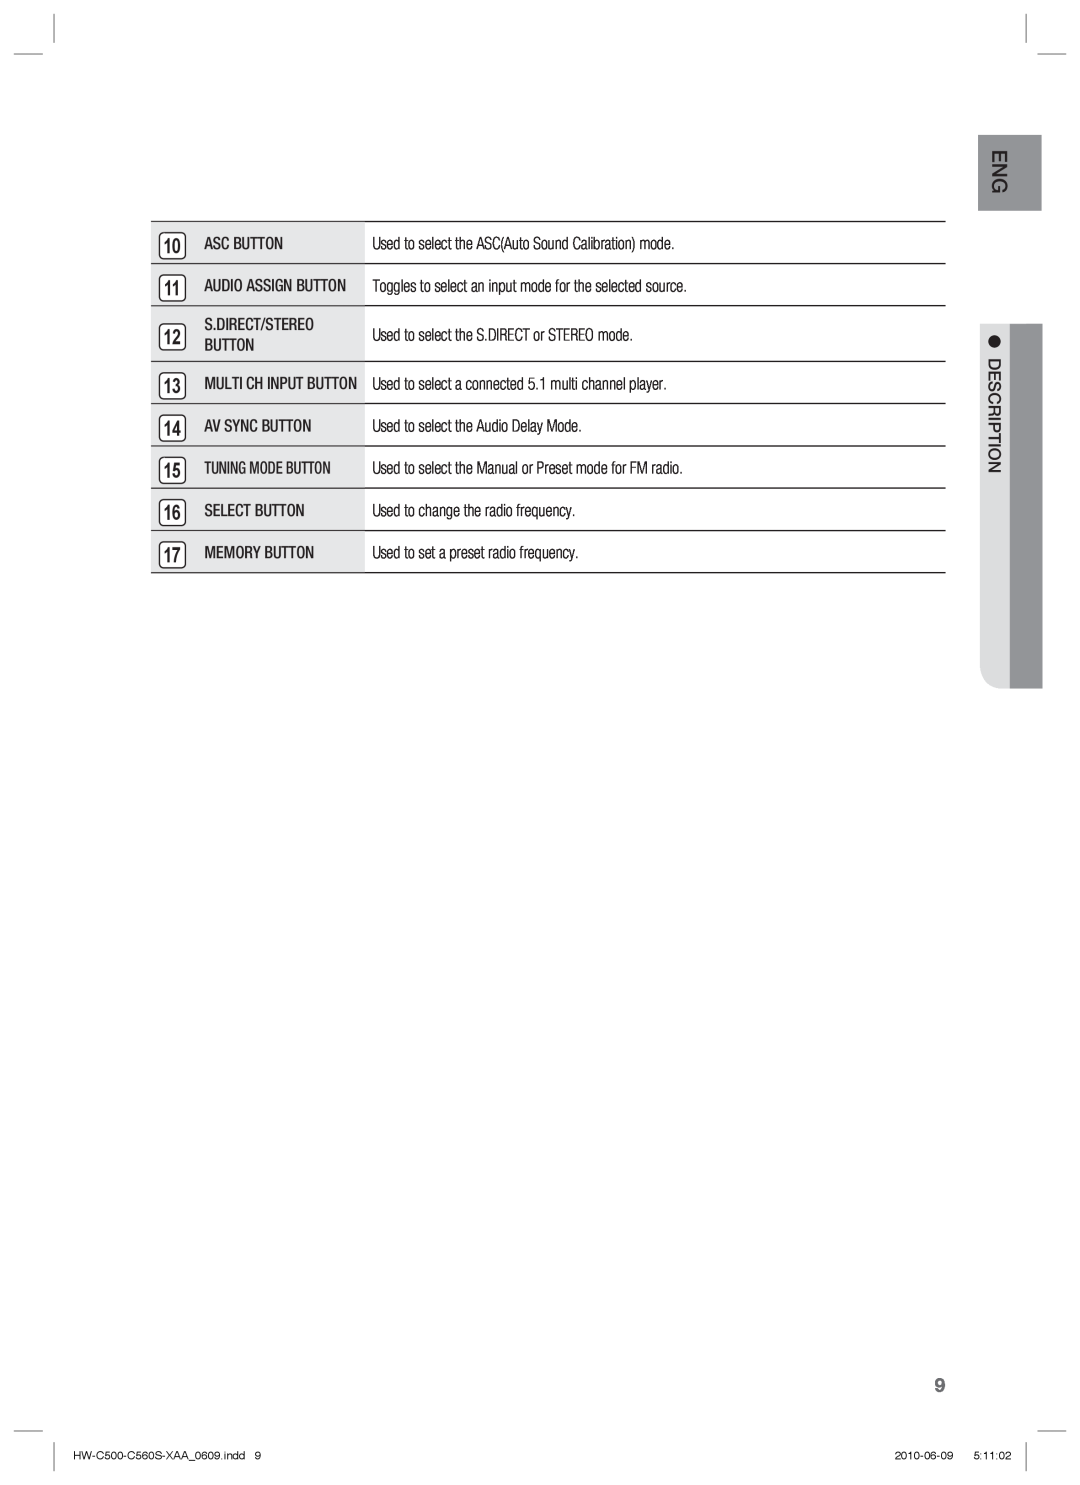 Samsung HW-C560S, HW-C500 user manual Asc Button 